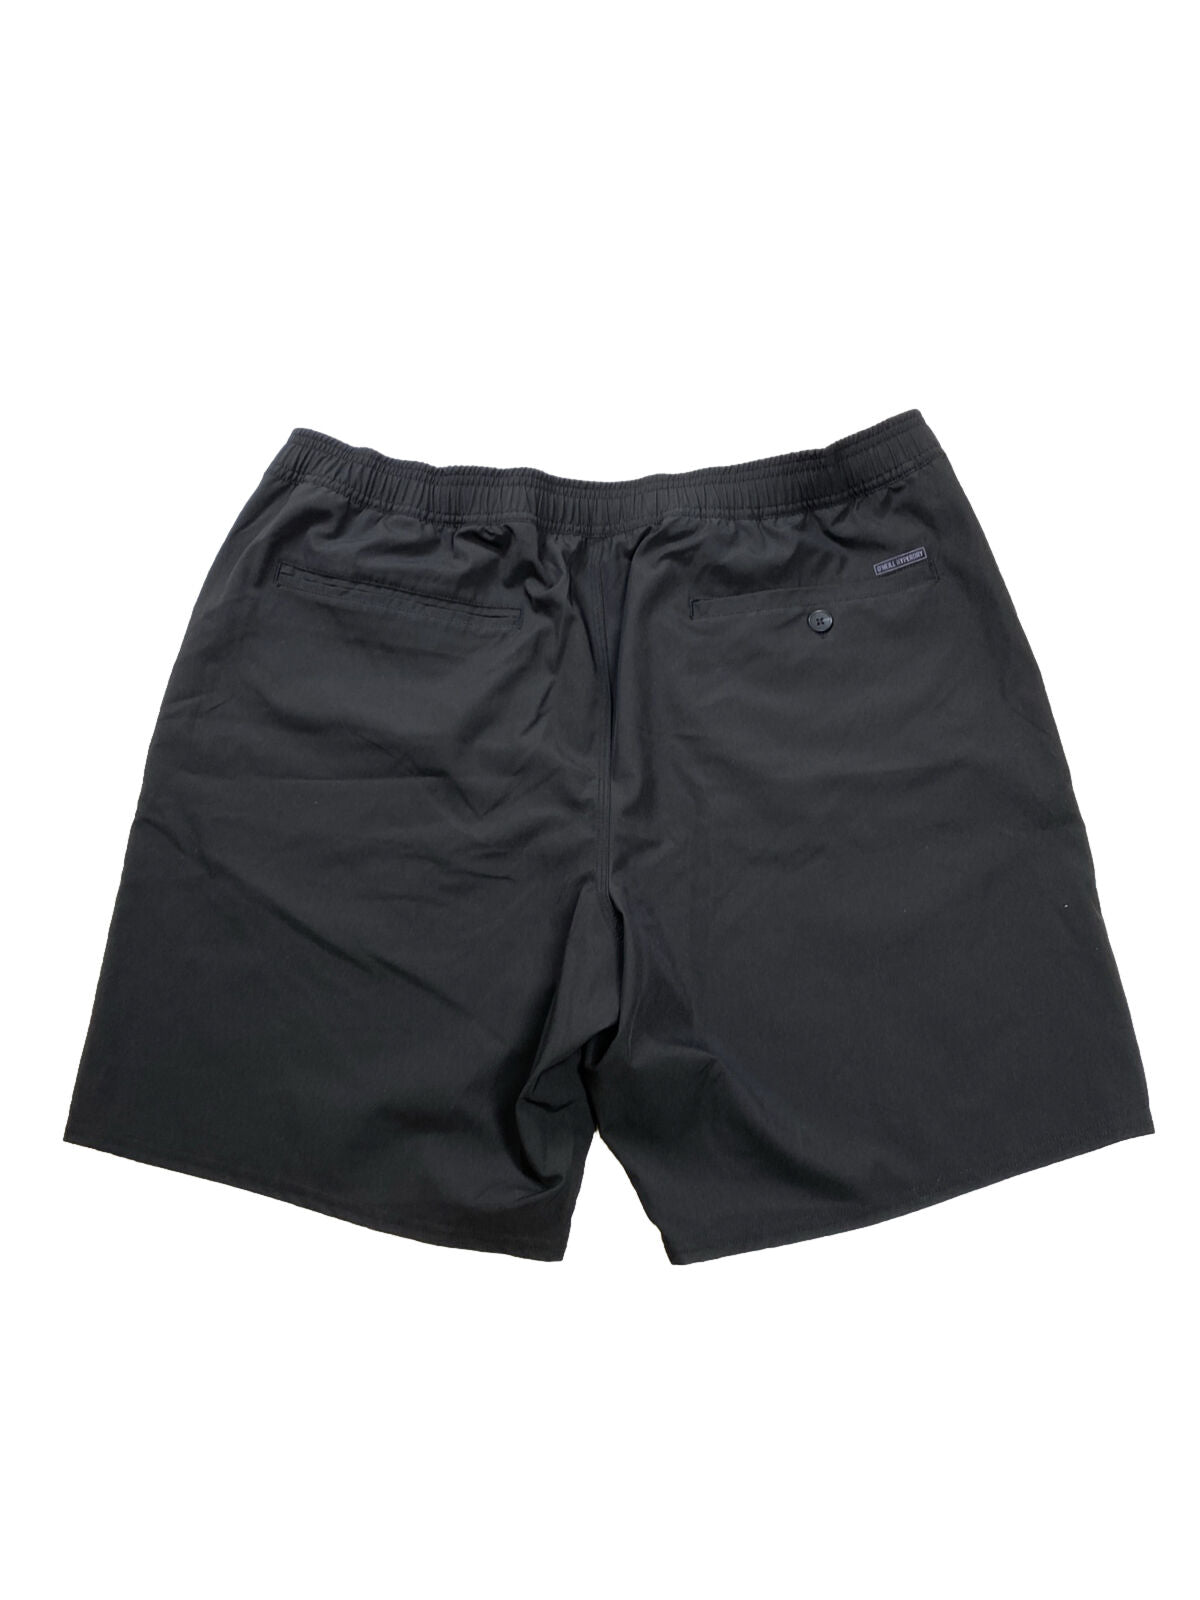 O'Neill Men's Black Stretch Unlined Hybrid Shorts - XL